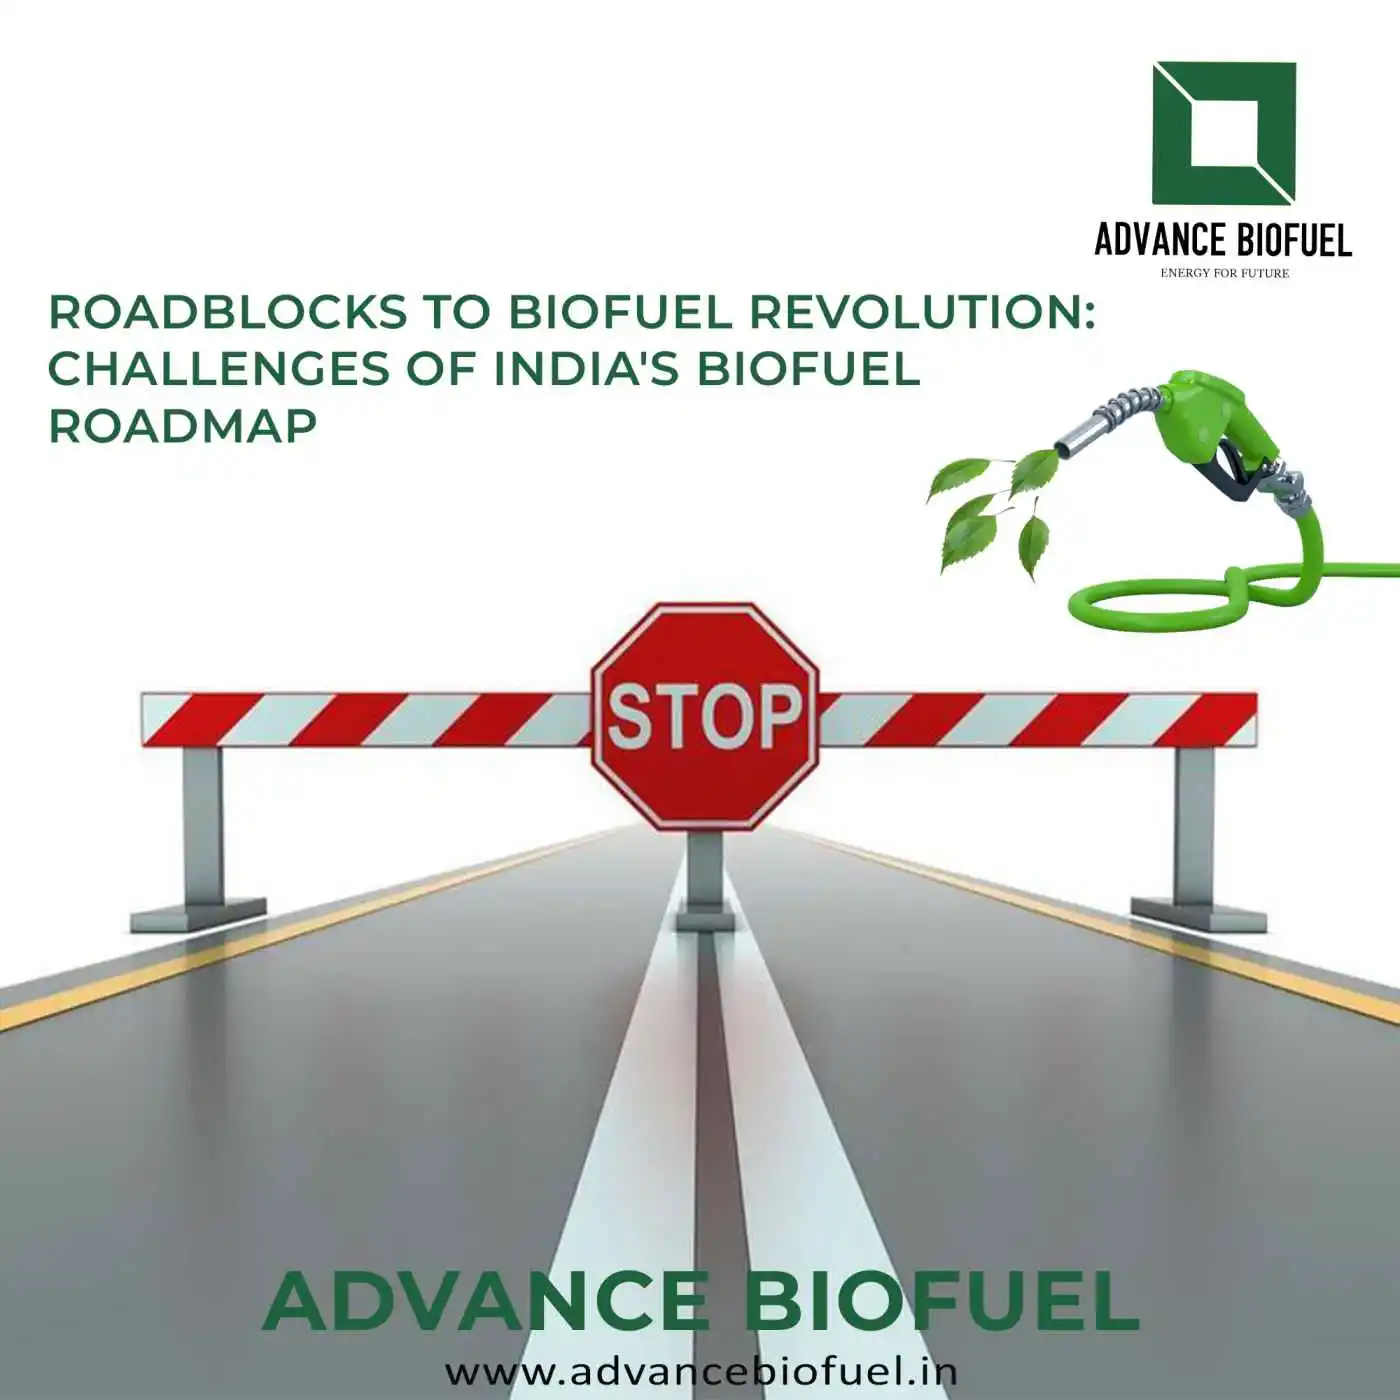 Roadblocks to Biofuel Revolution: Challenges of India’s Biofuel Roadmap